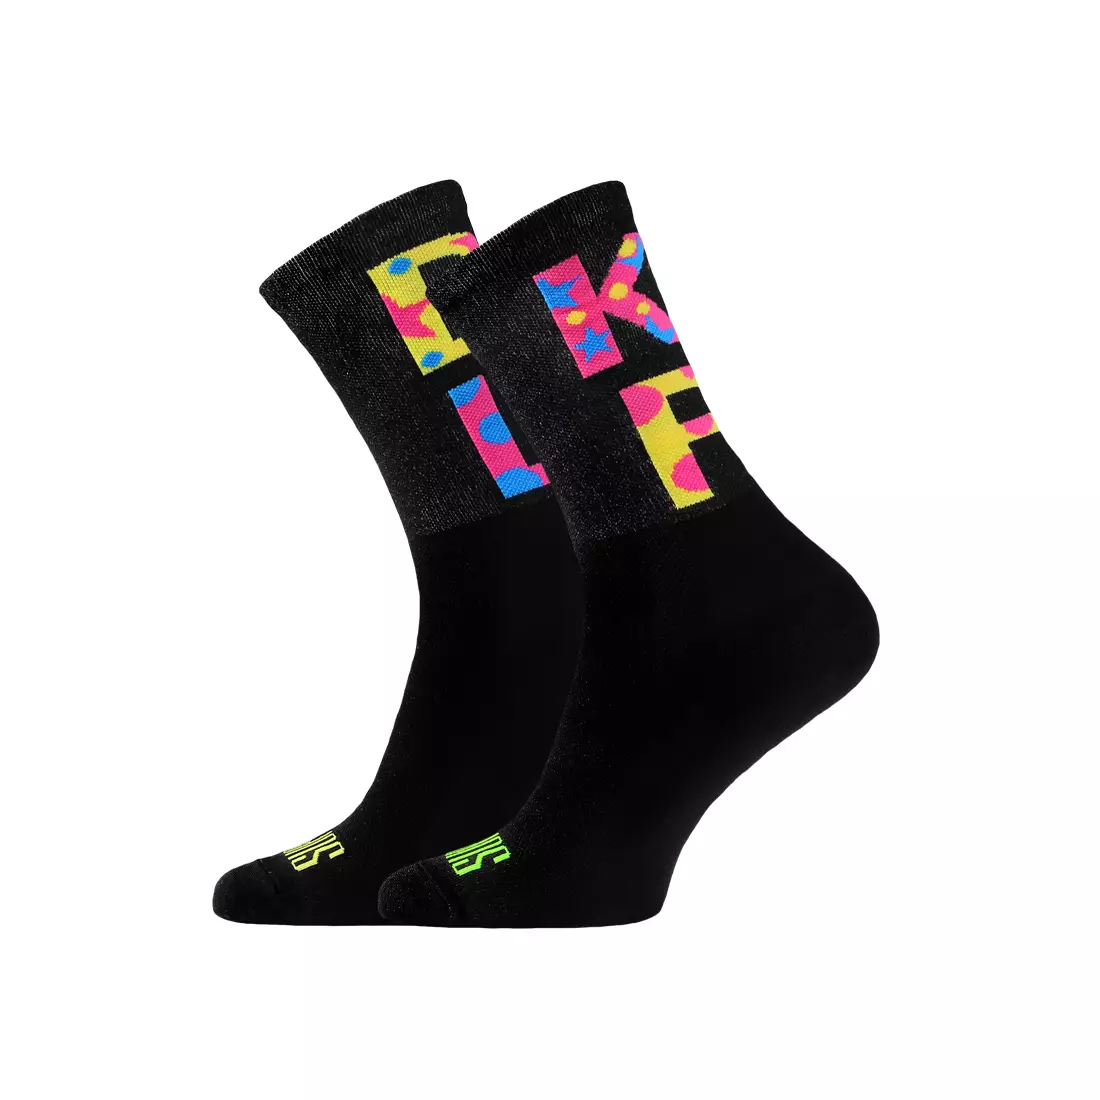 SUPPORTSPORT socks BIKE LIFE black